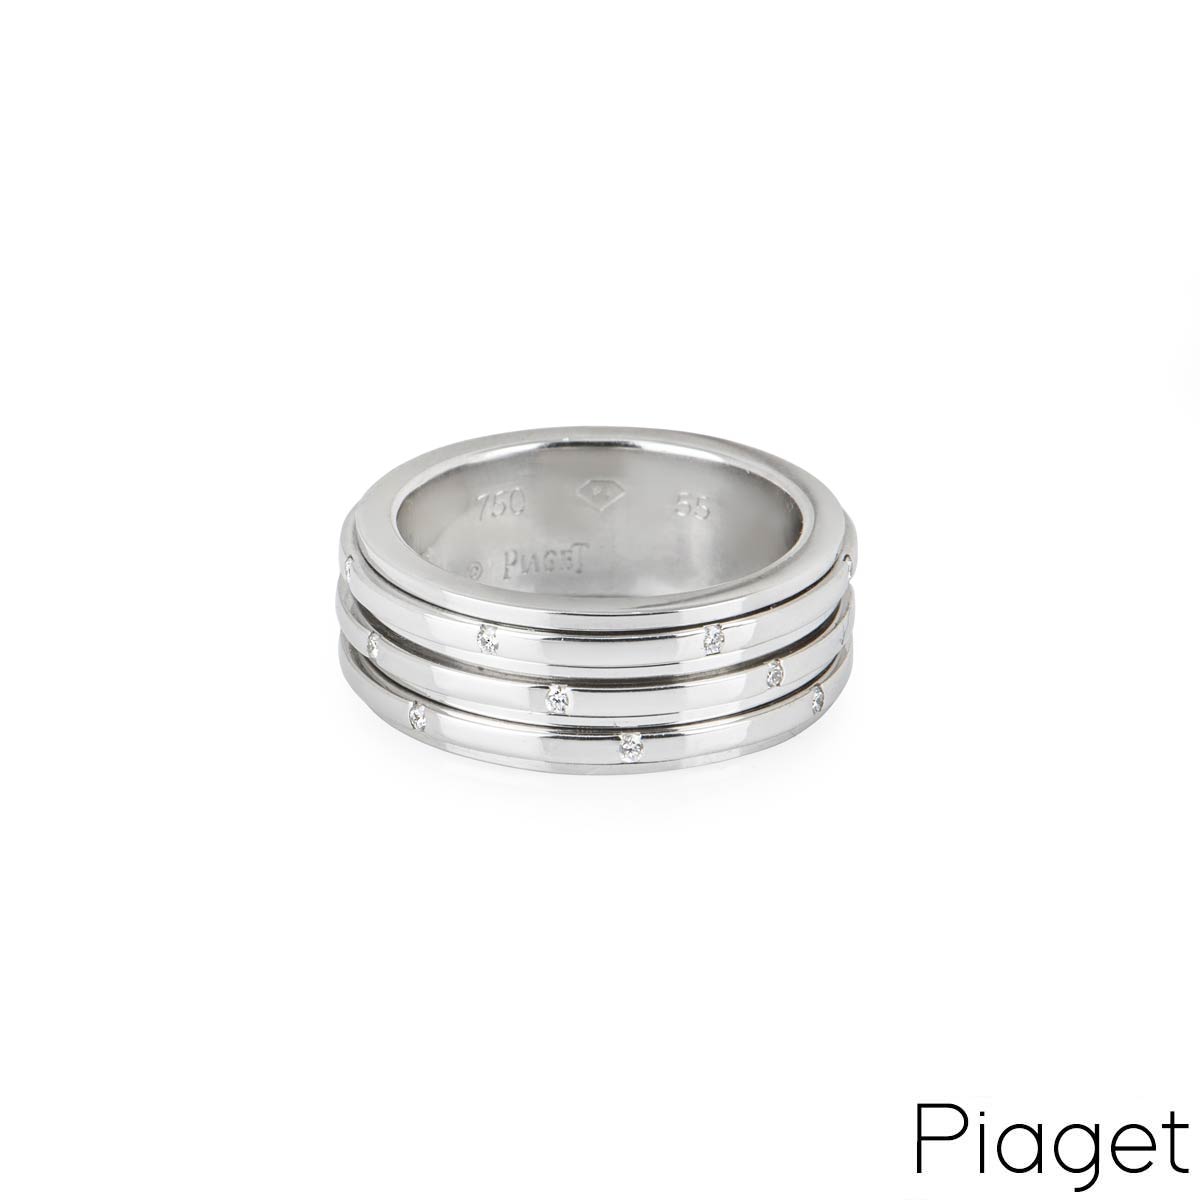 Piaget White Gold Diamond Set Possession Ring G34PO455